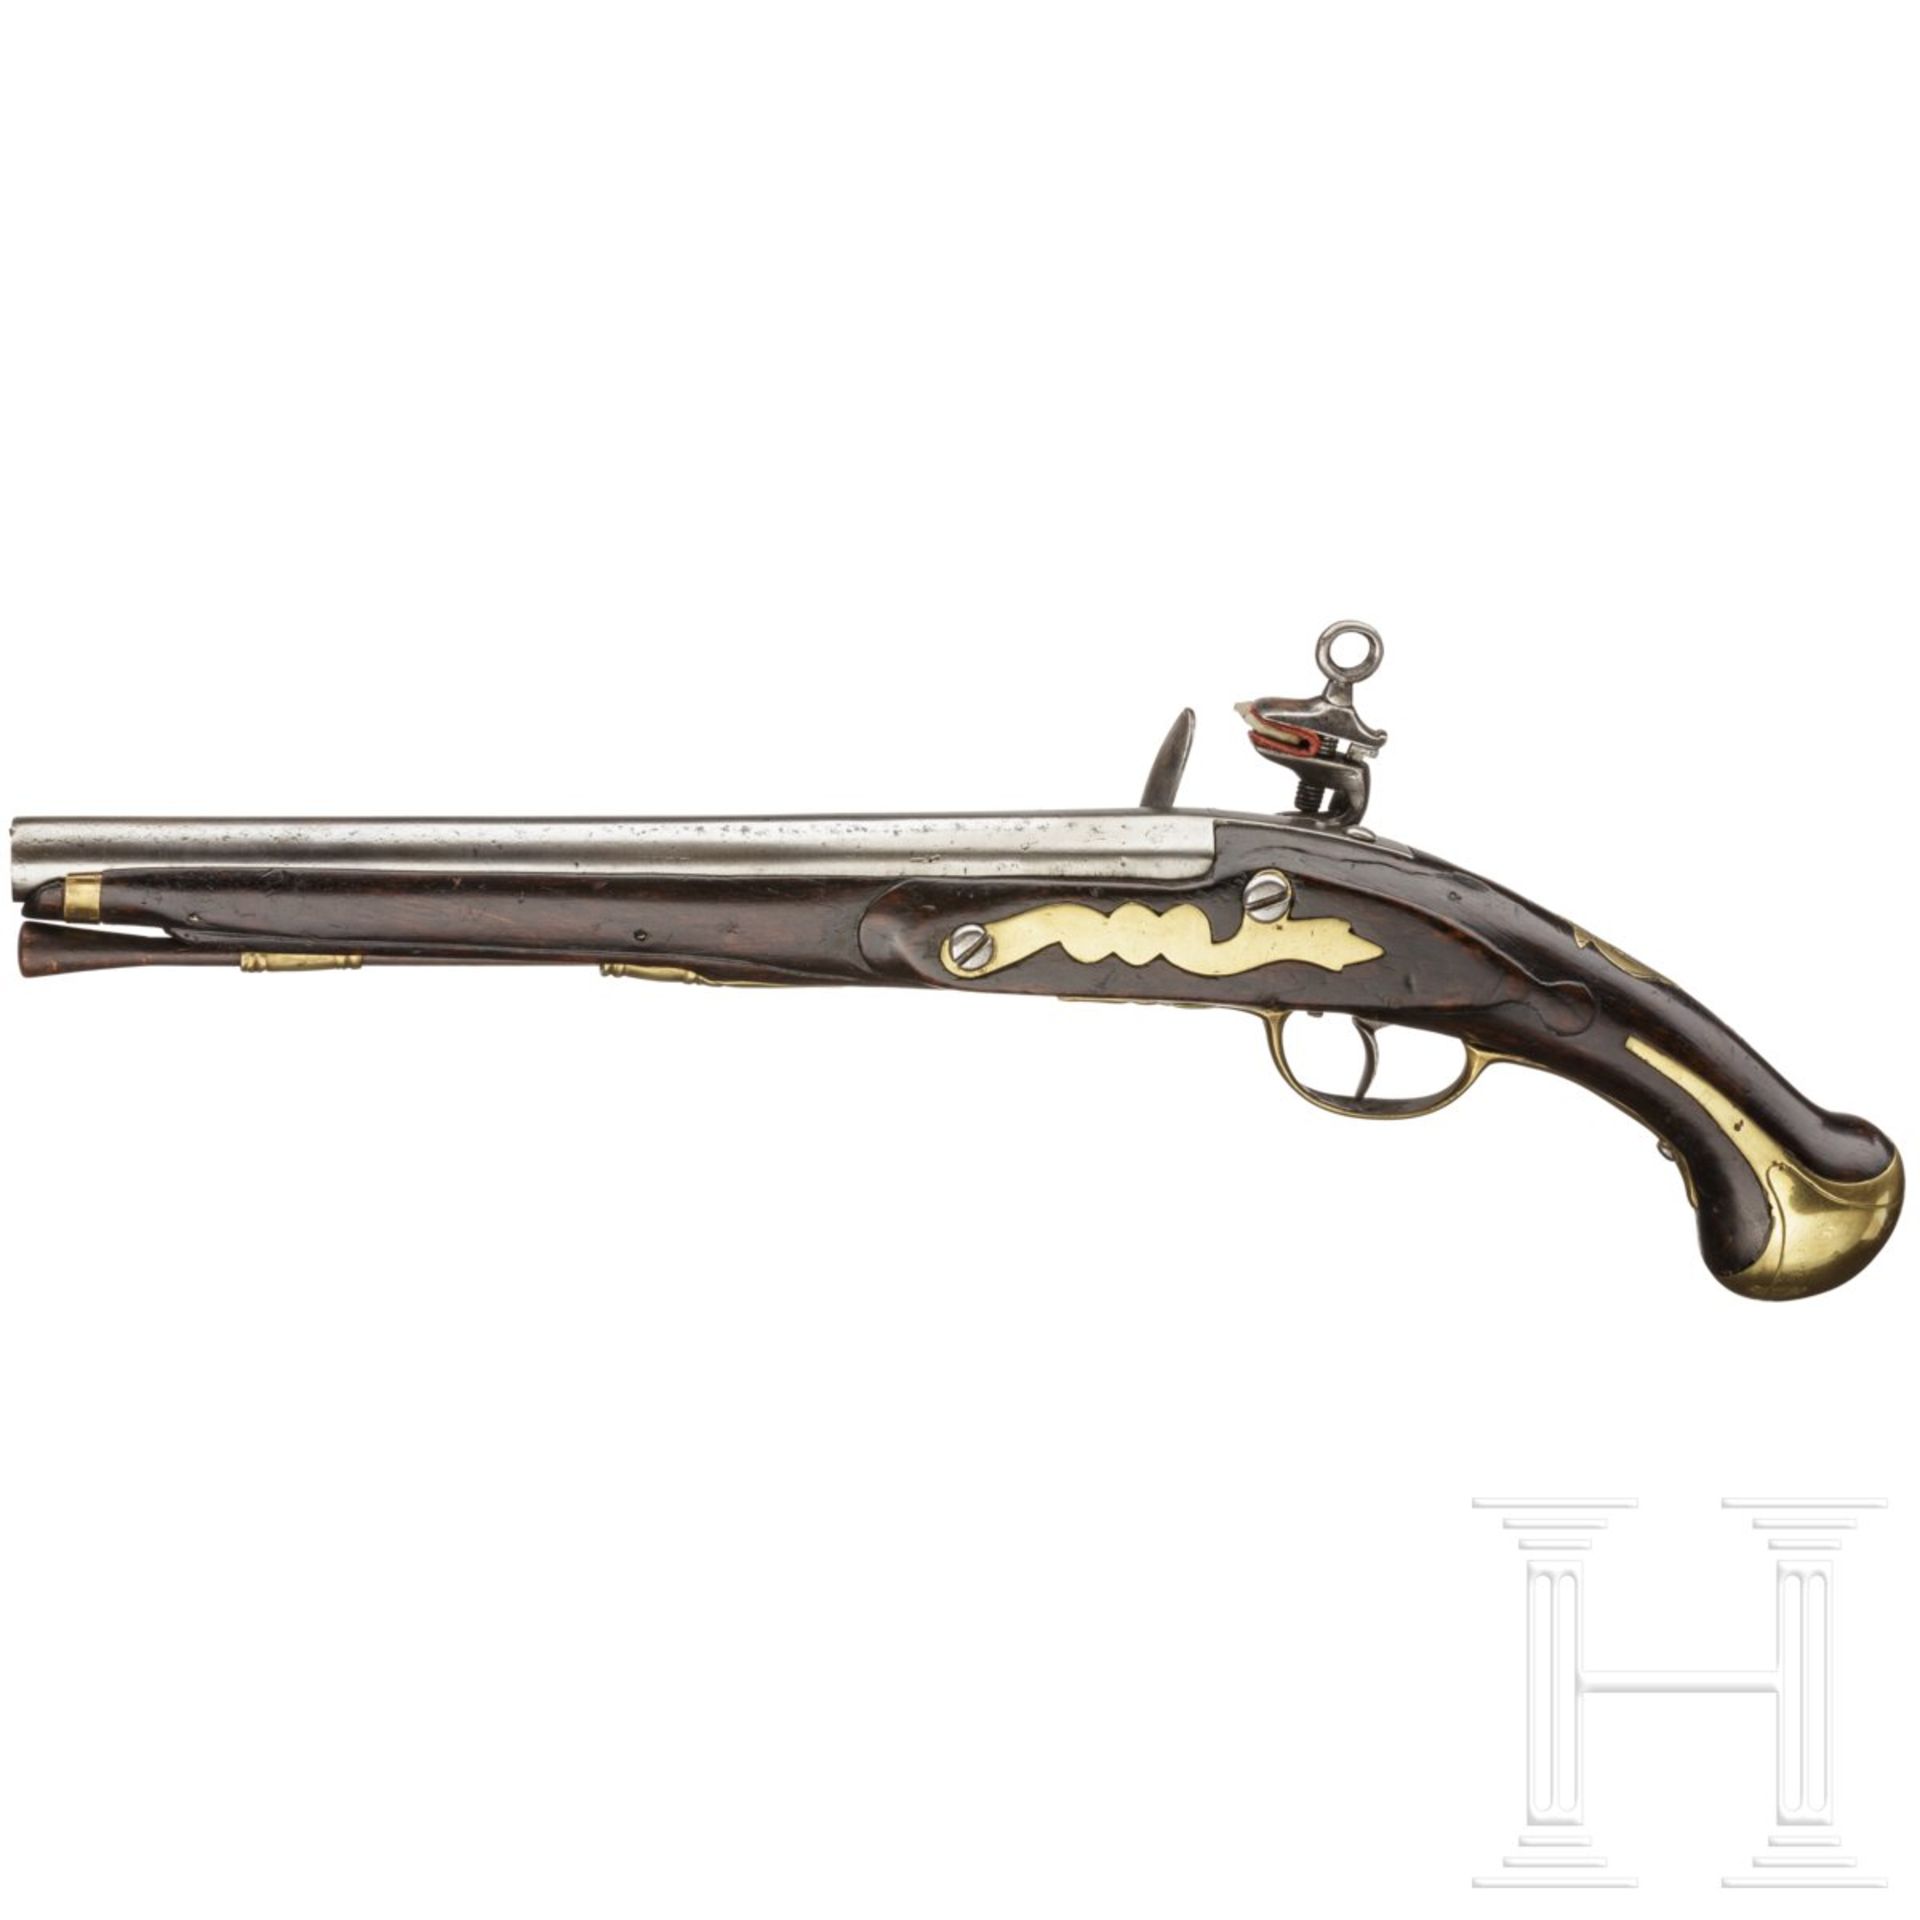 Kavallerie-Steinschlosspistole Mod. 1753, Fertigung um 1760 - Bild 2 aus 3